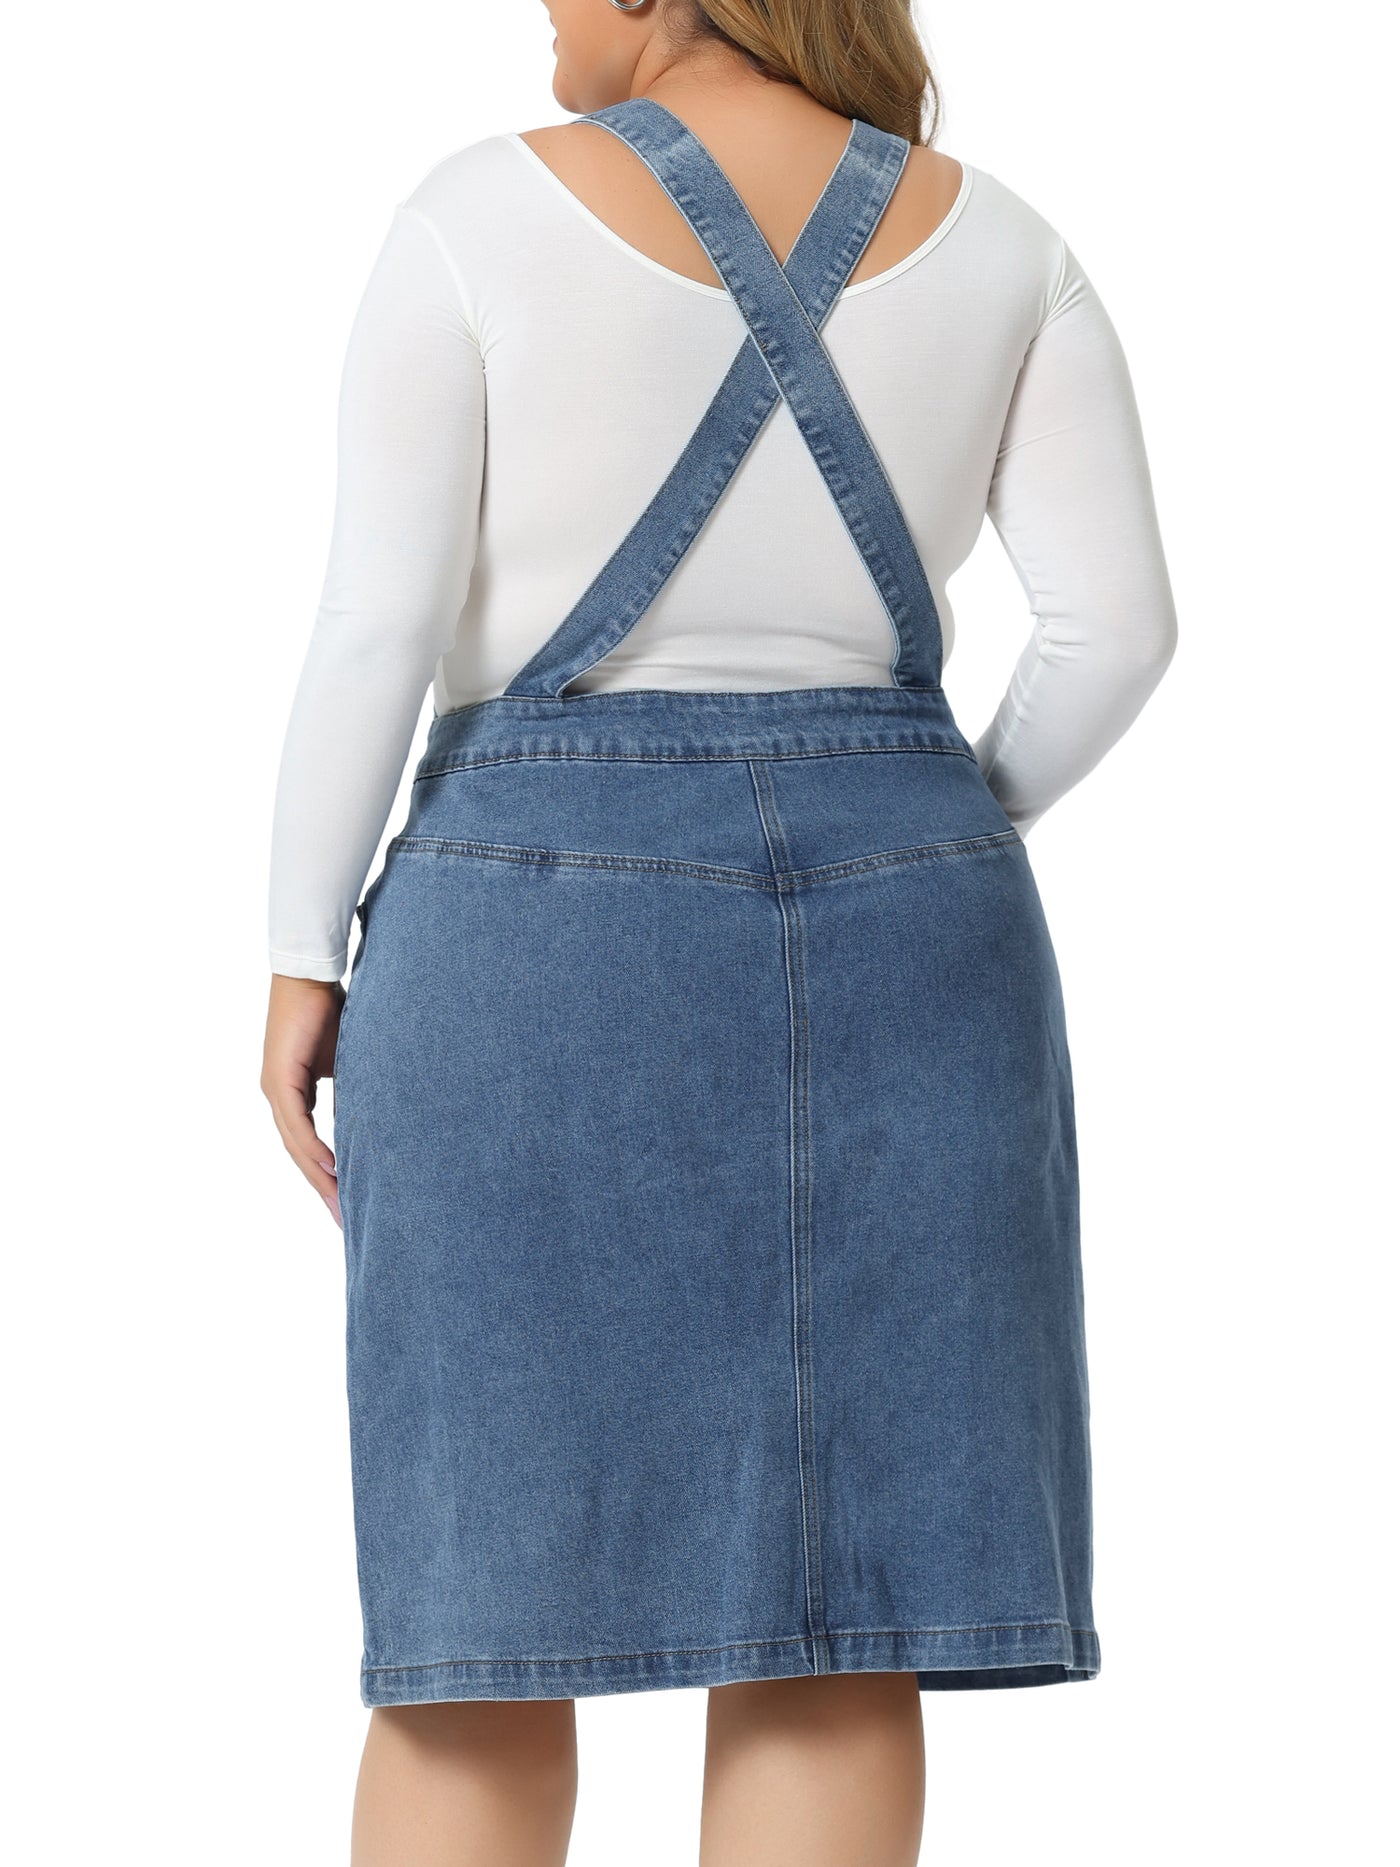 Bublédon Plus Size Denim Overall Dress for Women Button Front Adjustable Strap Suspender Jean Skirt